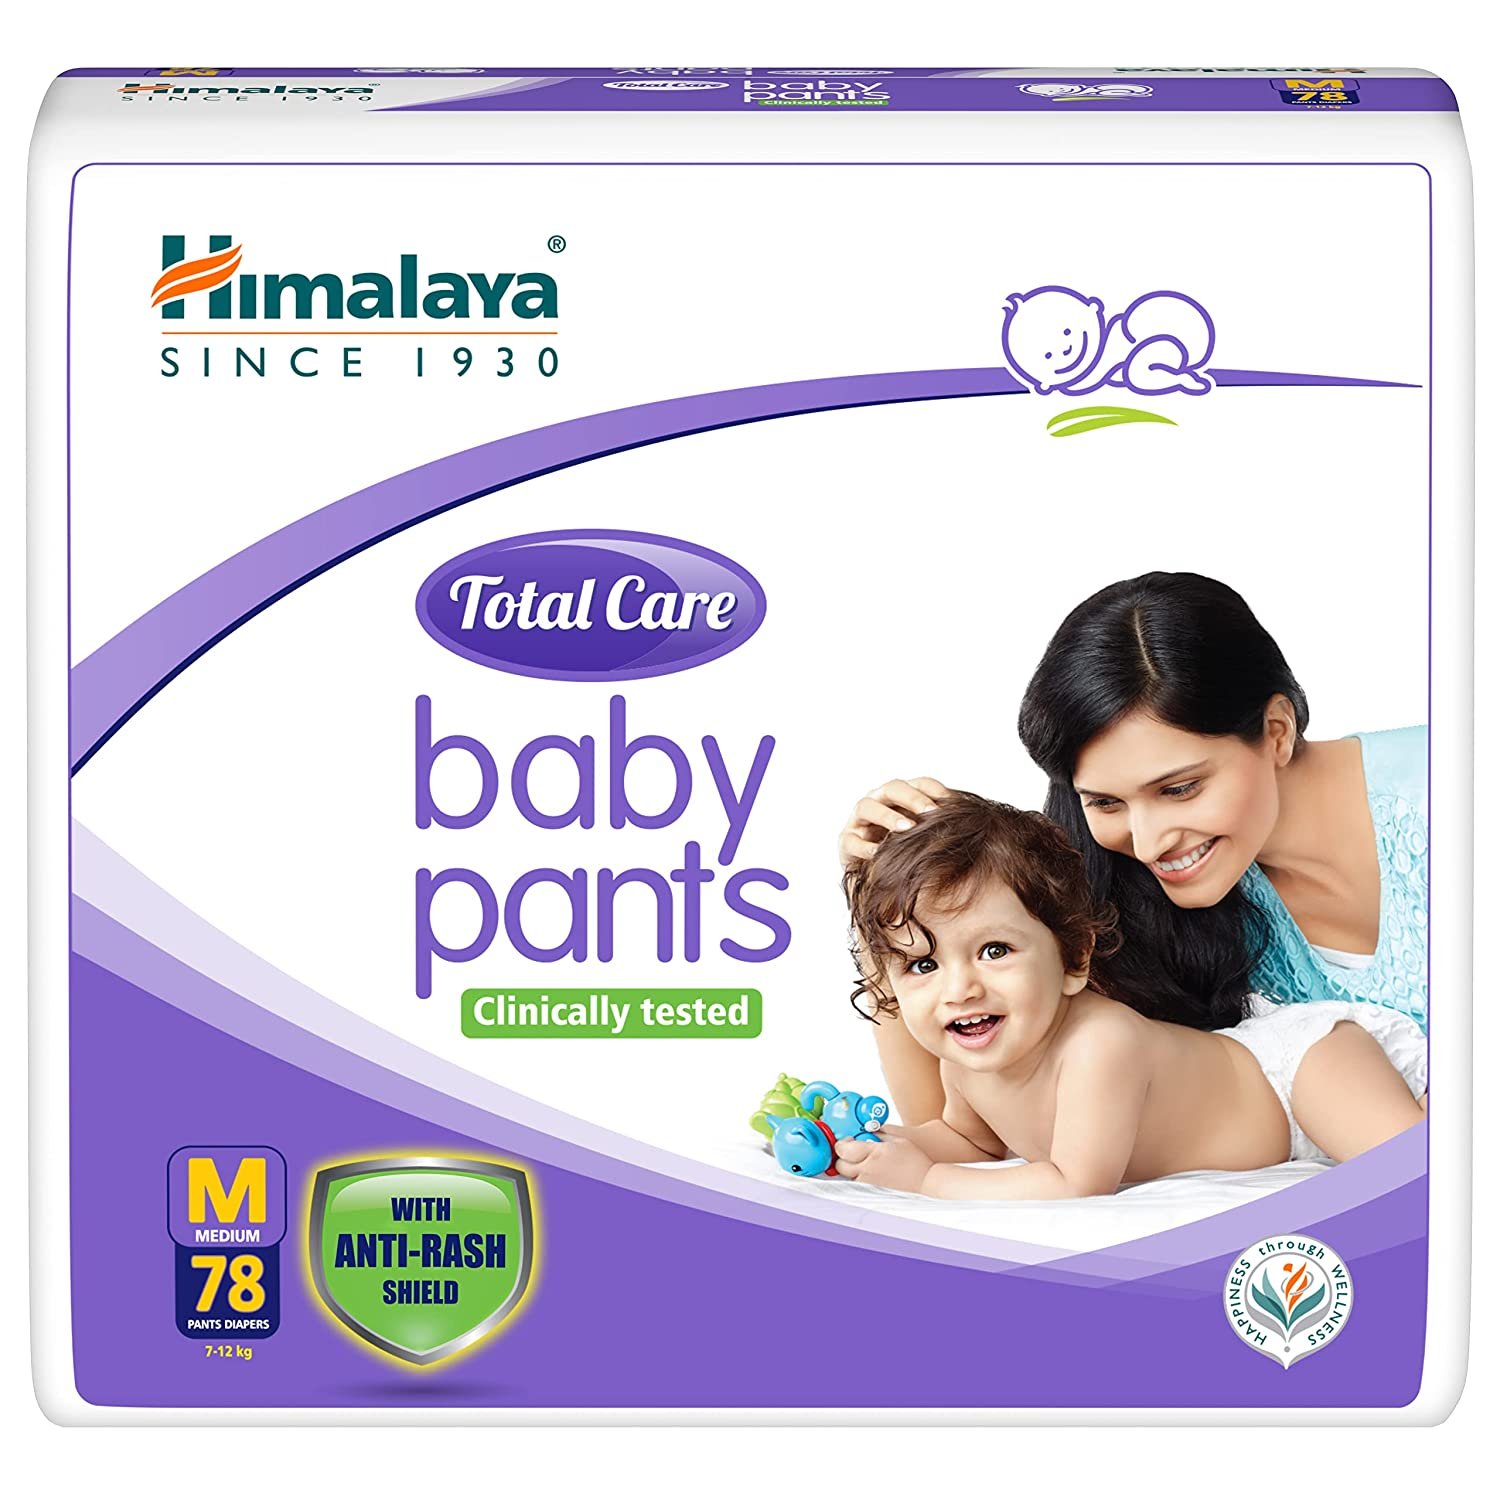 Himalaya Total Care Baby Pants Diapers, Medium, 78 Count